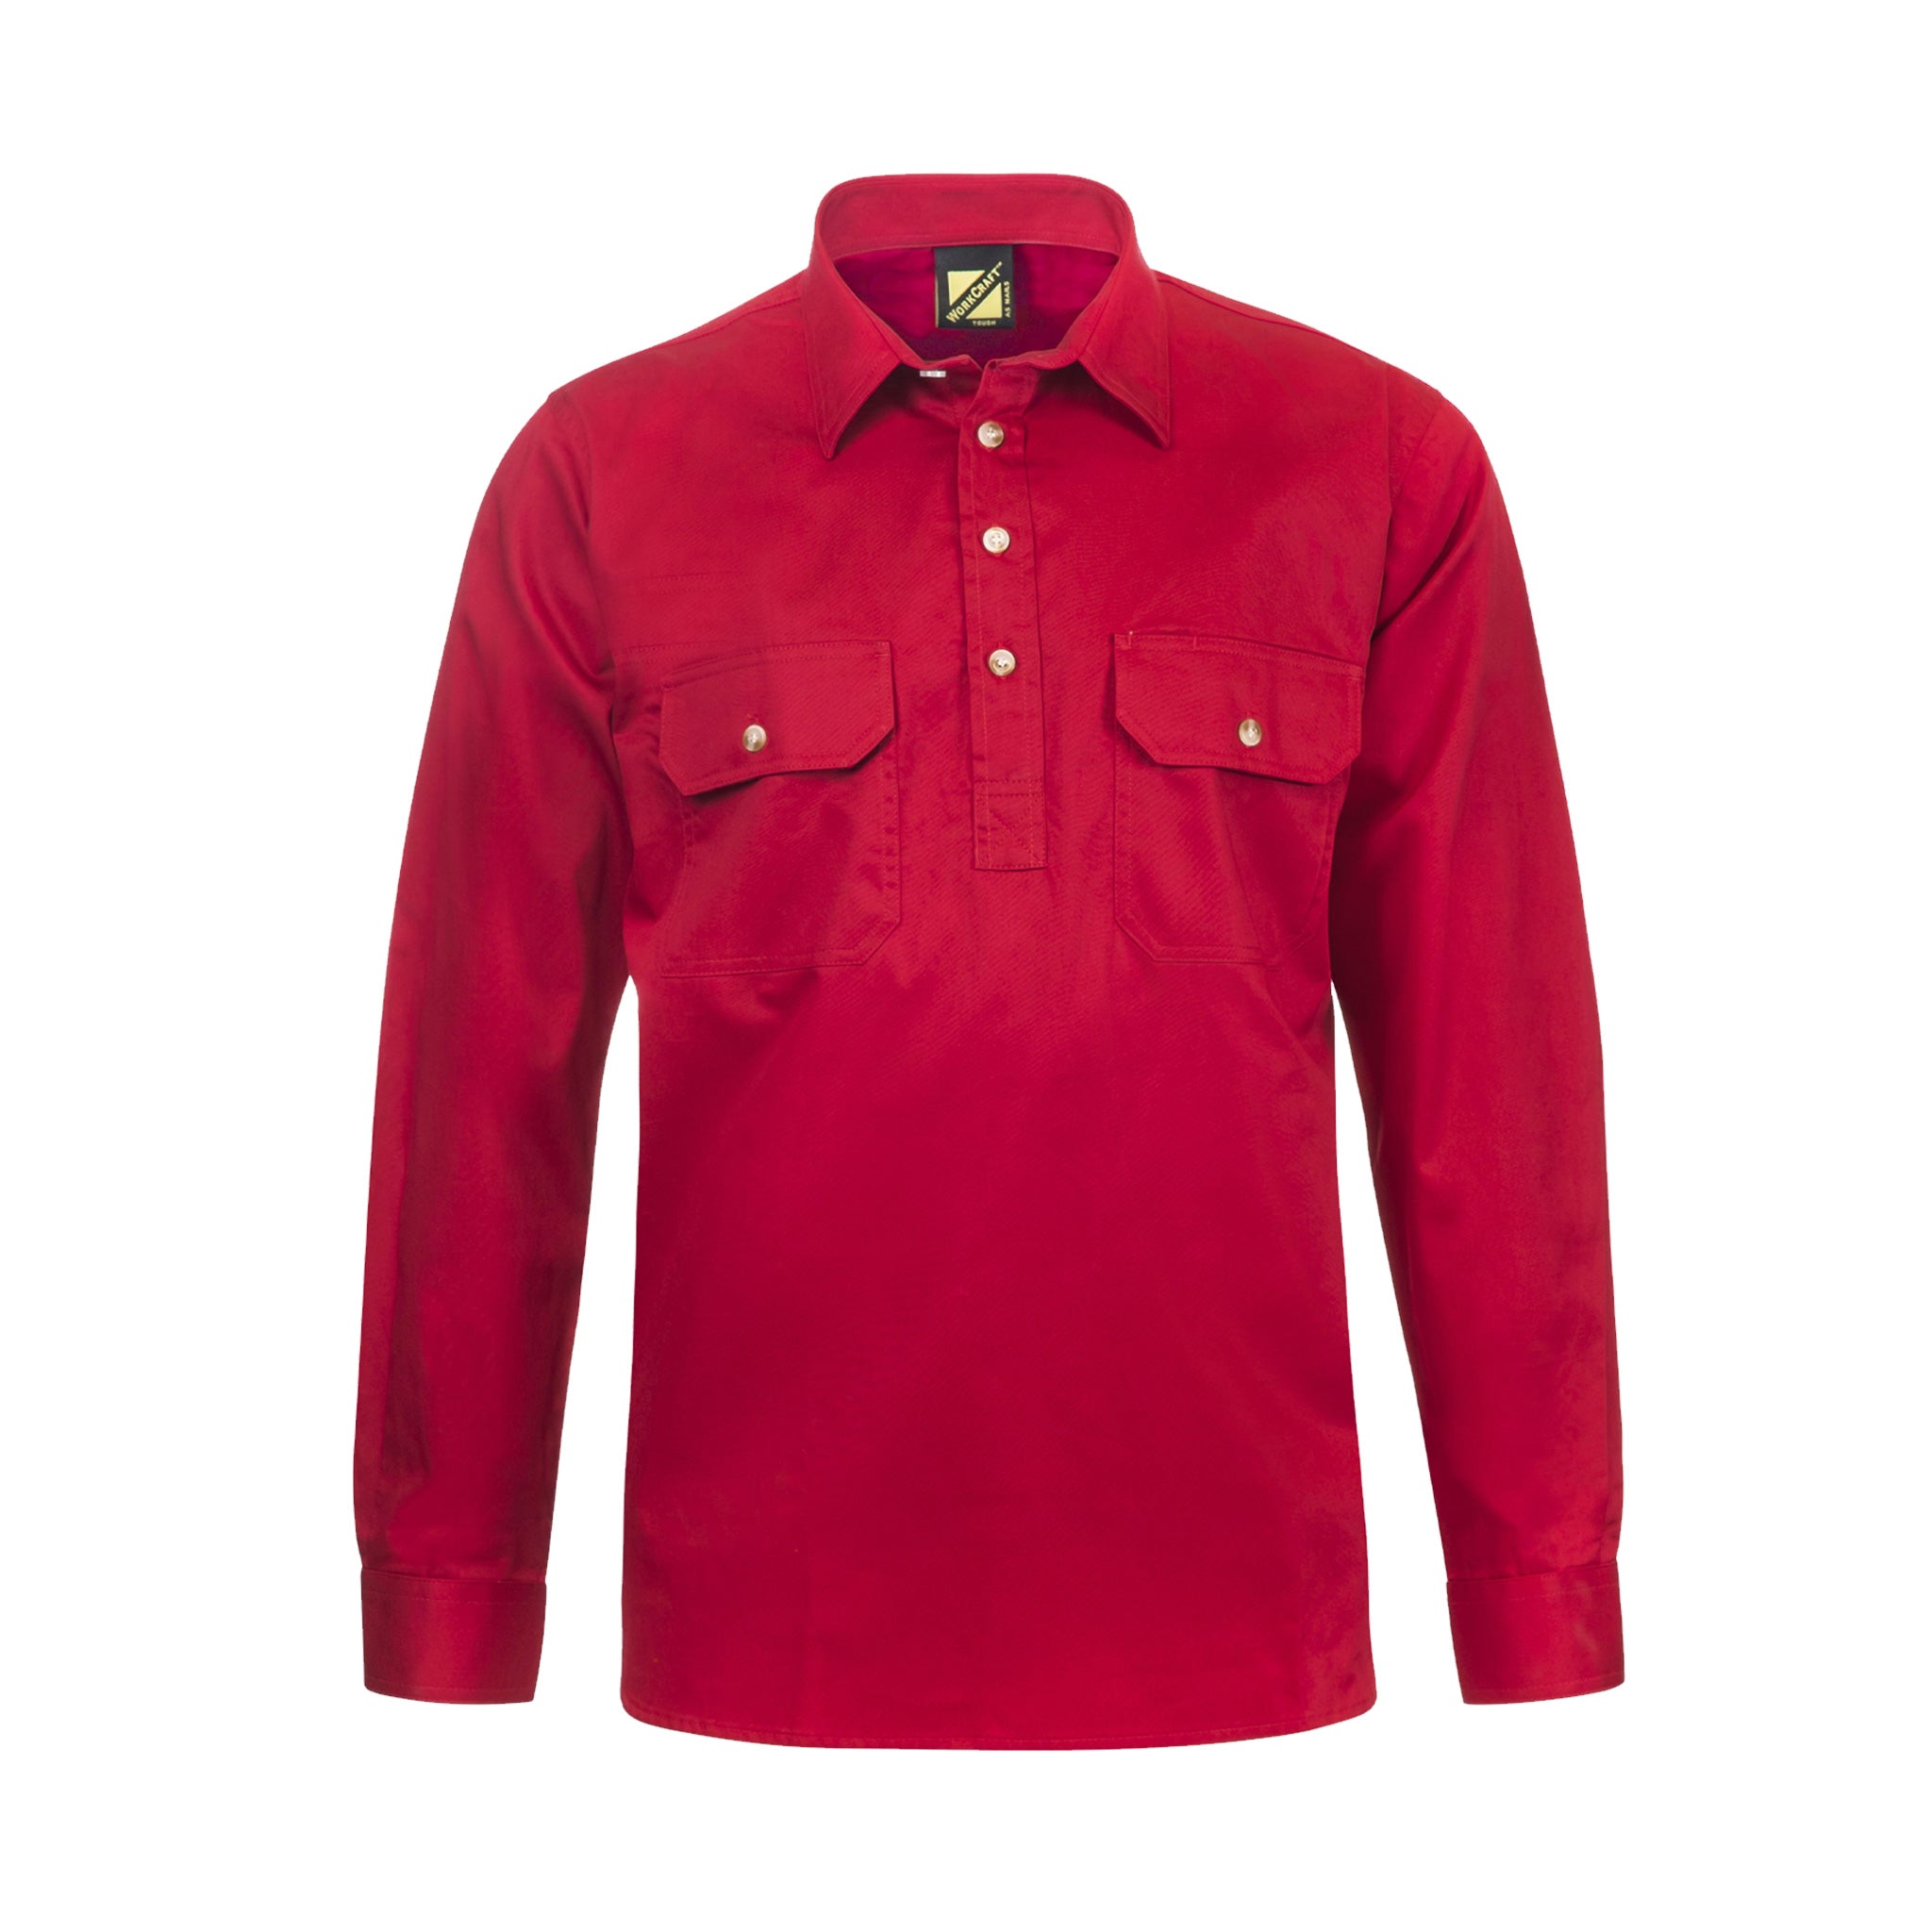 lightweight half placket long sleeve shirt in crimson red